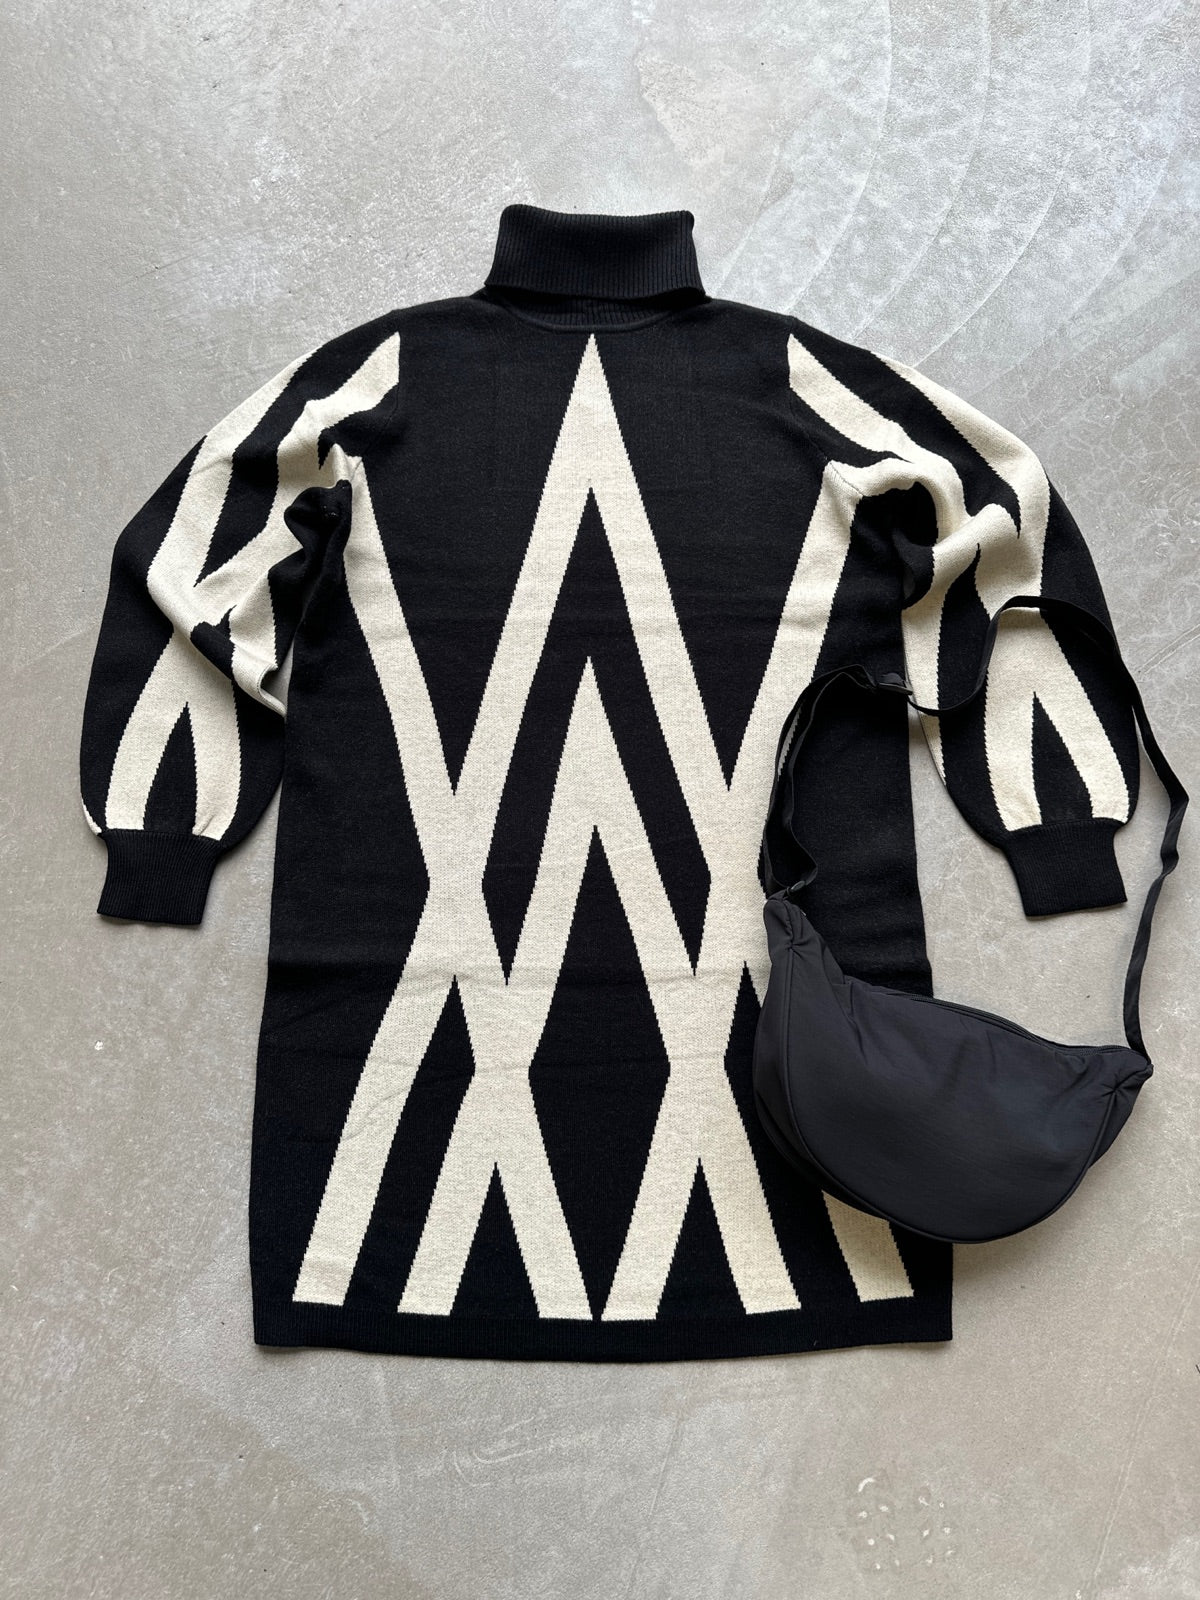 Objray Long Sleeve Knit Rollneck Dress Black Sandshell Graphic